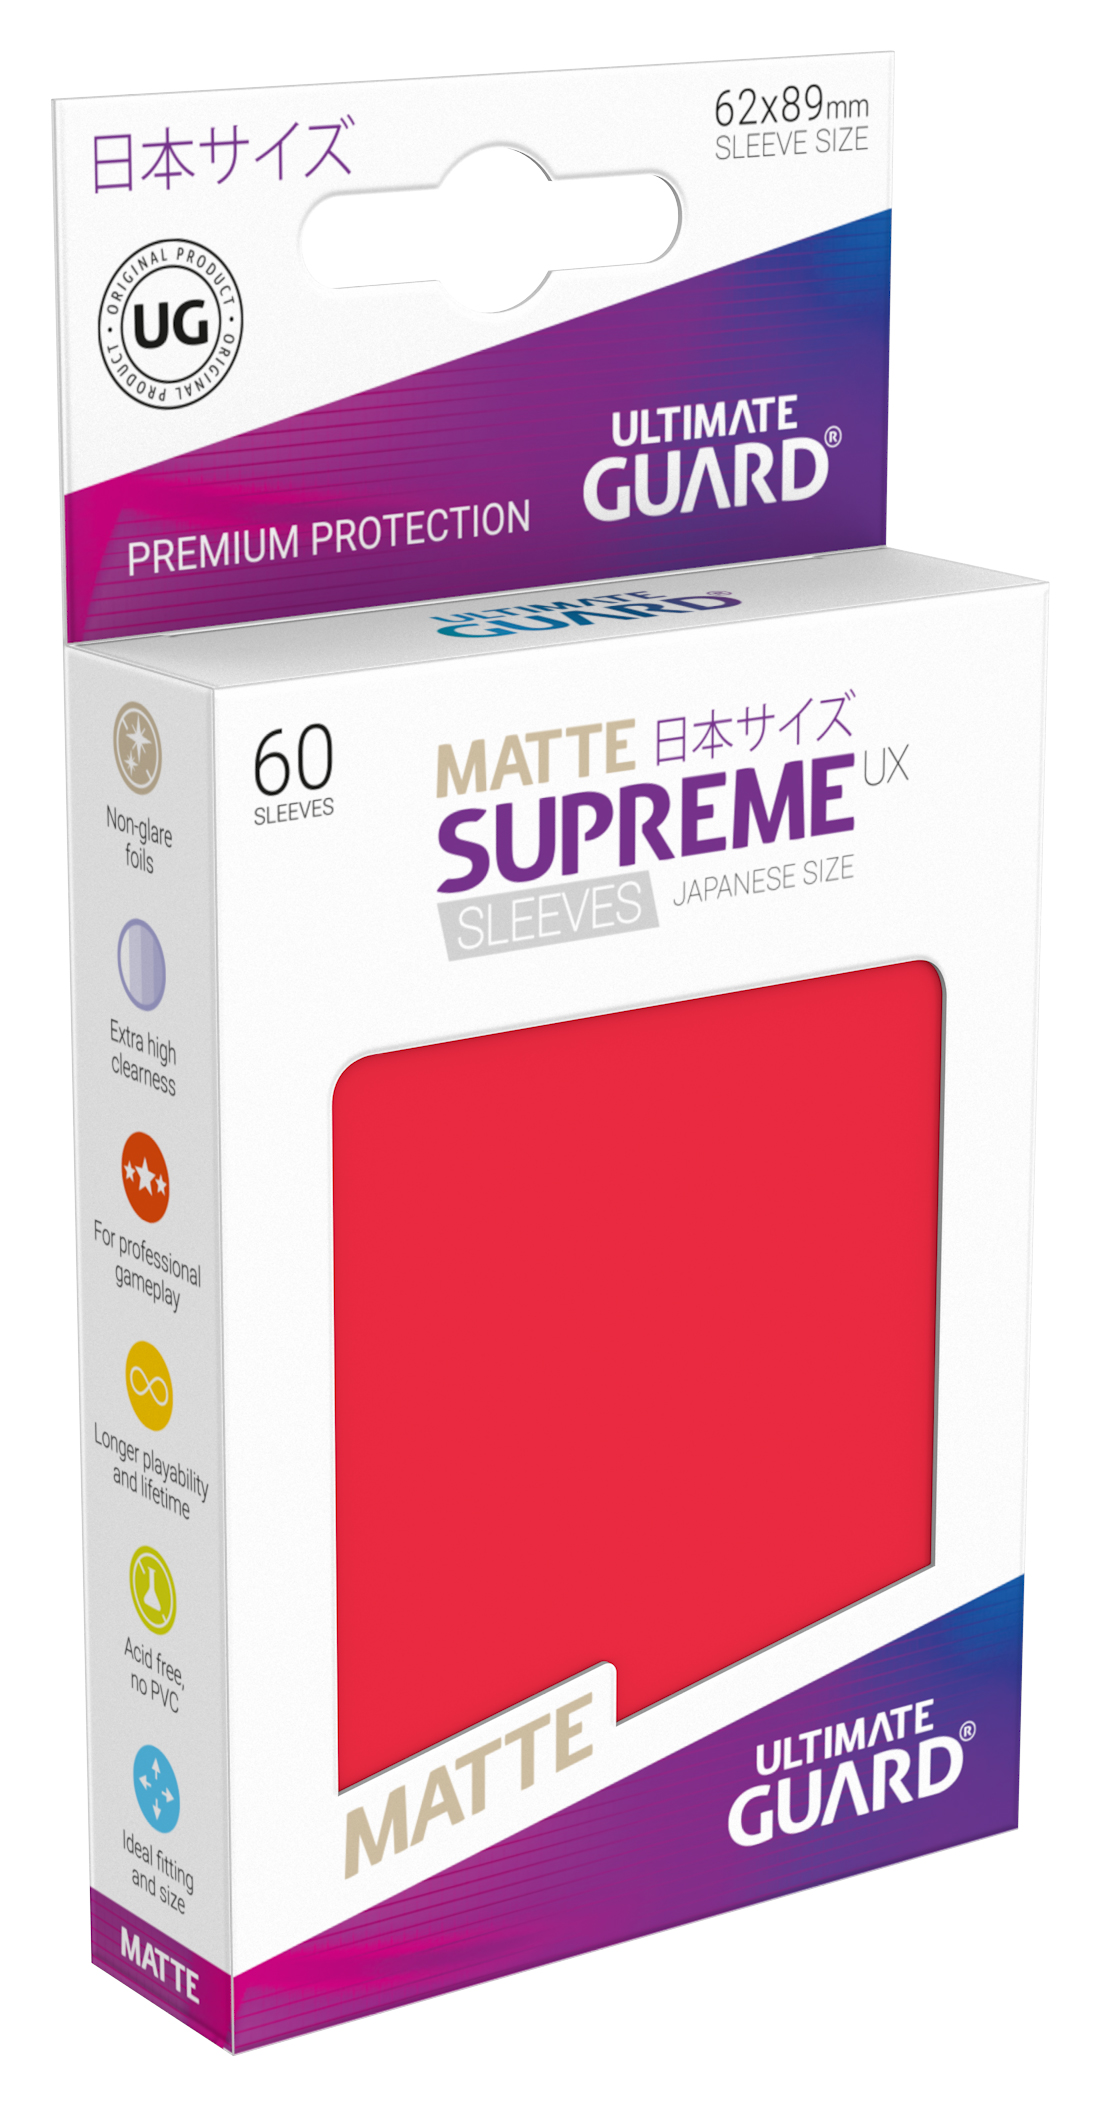 Matte Black Standard Size 80 Piece Ultimate Guard UGD010549 Supreme UX Sleeves 